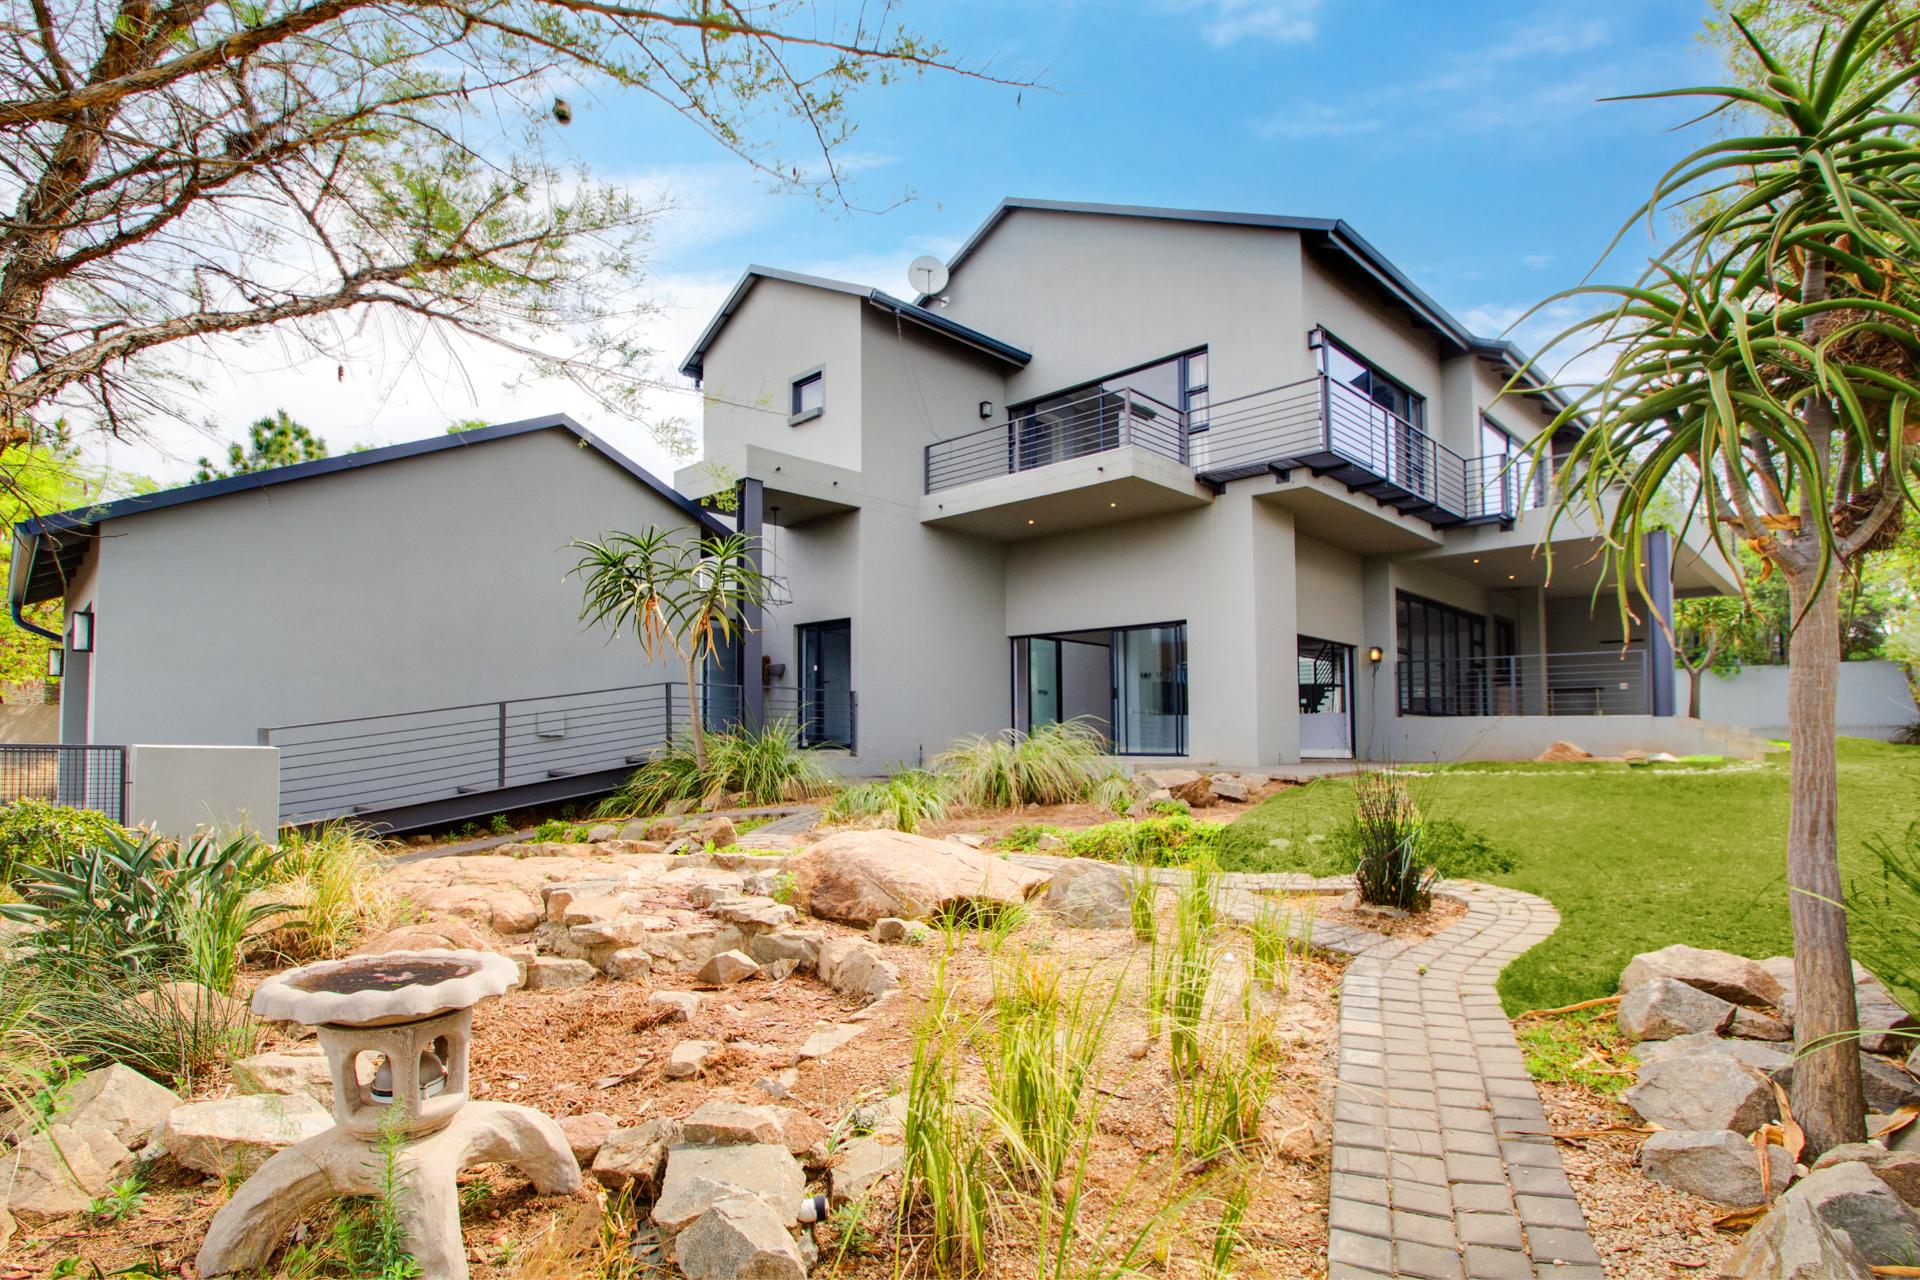 Modern Contemporary 4 Bedroom House For Rent in Helderfontein Estate